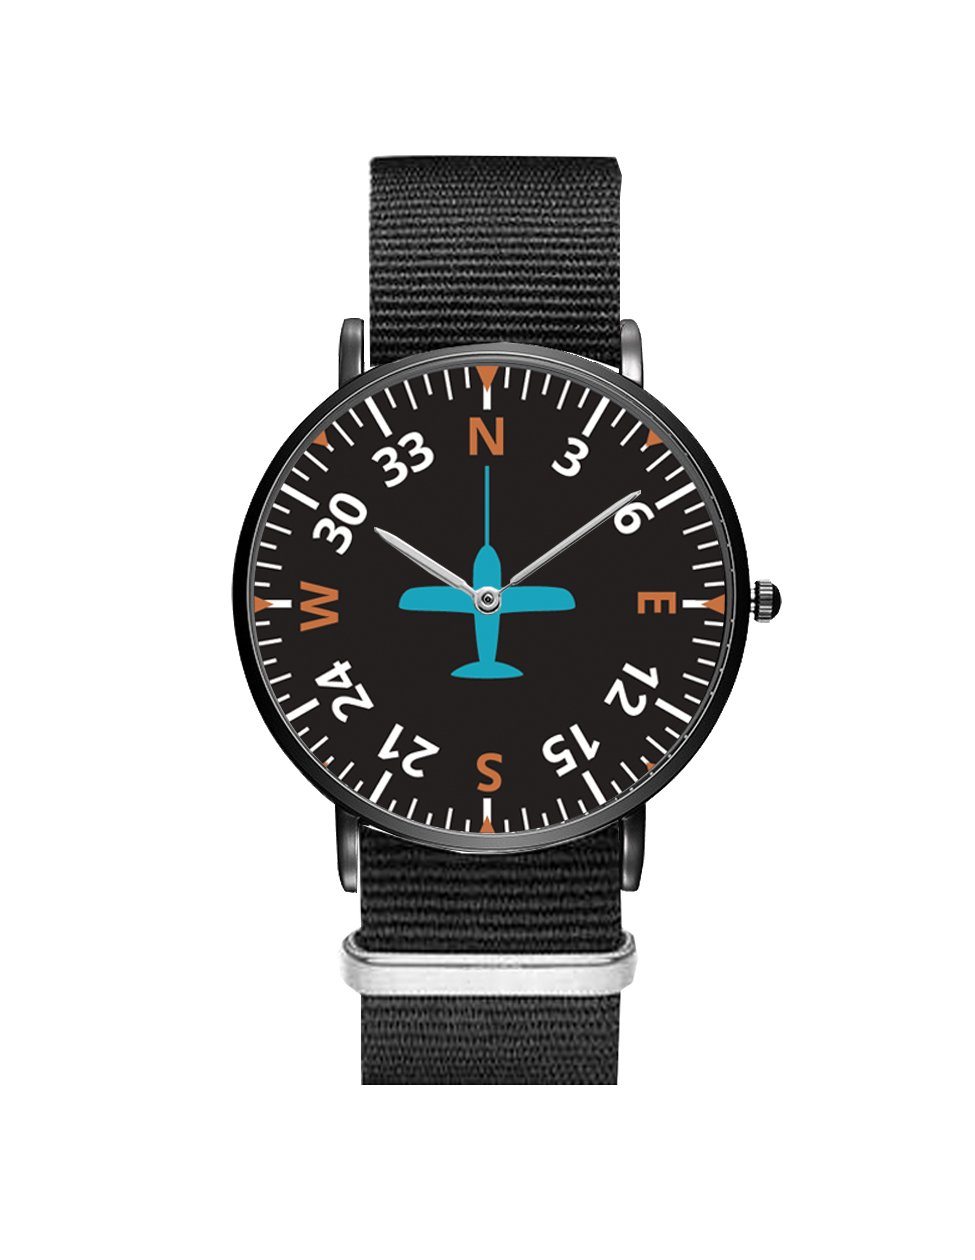 Airplane Instrument Series (Heading2) Leather Strap Watches Pilot Eyes Store Black & Black Nylon Strap 